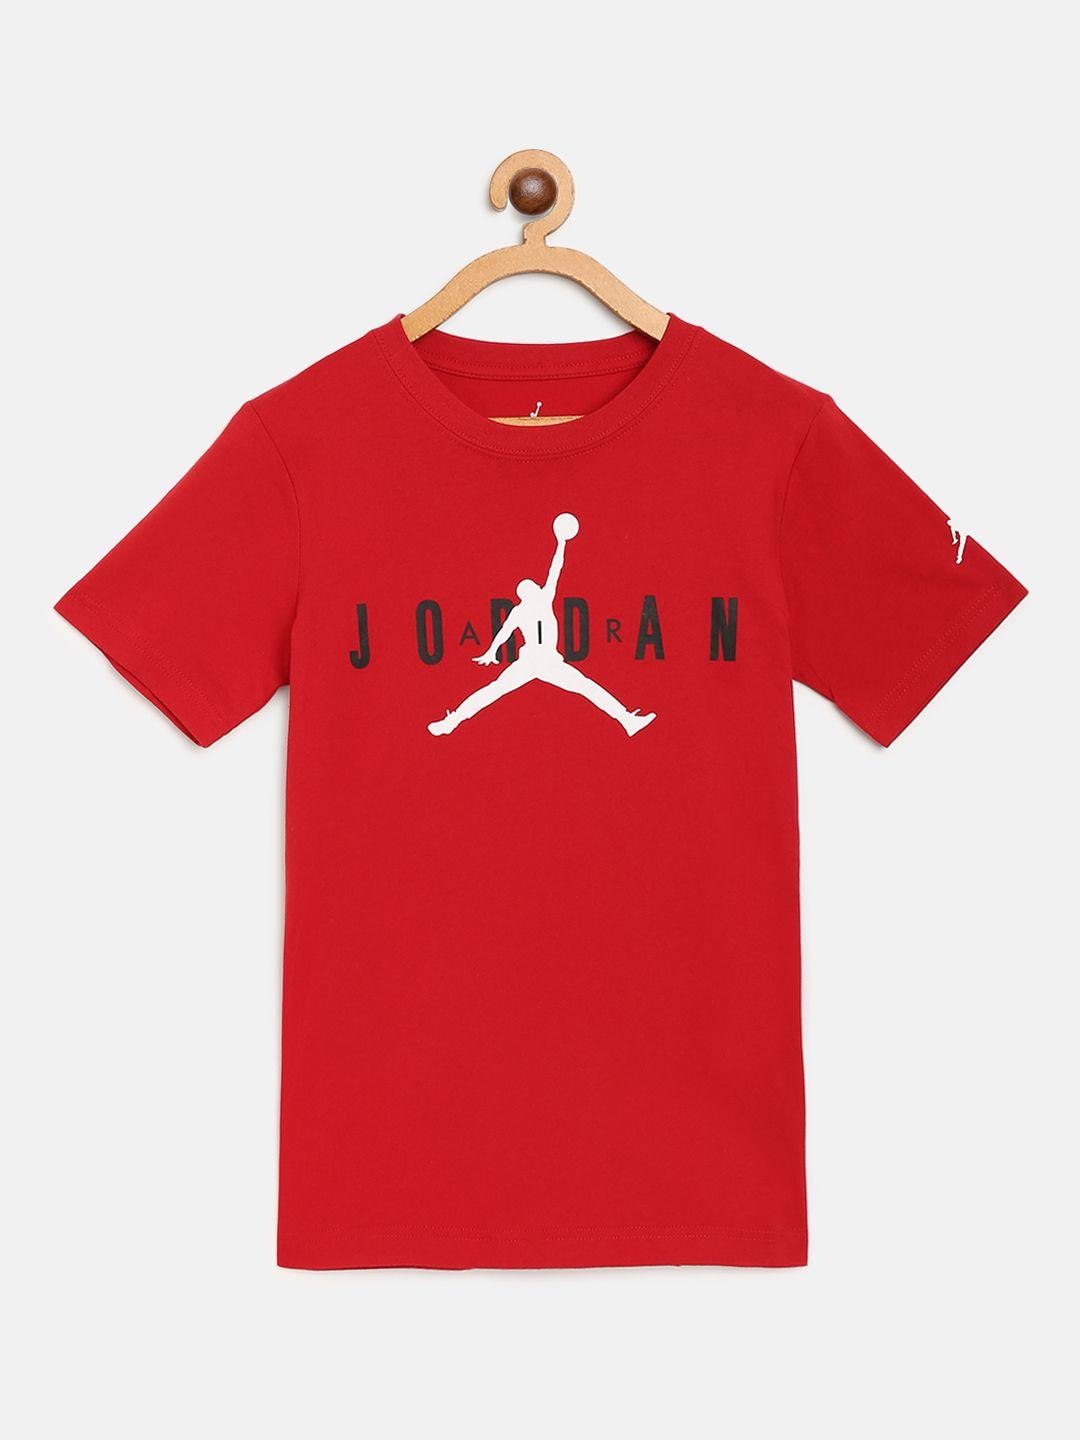 jordan-boys-red-brand-logo-print-round-neck-basketball-pure-cotton-t-shirt